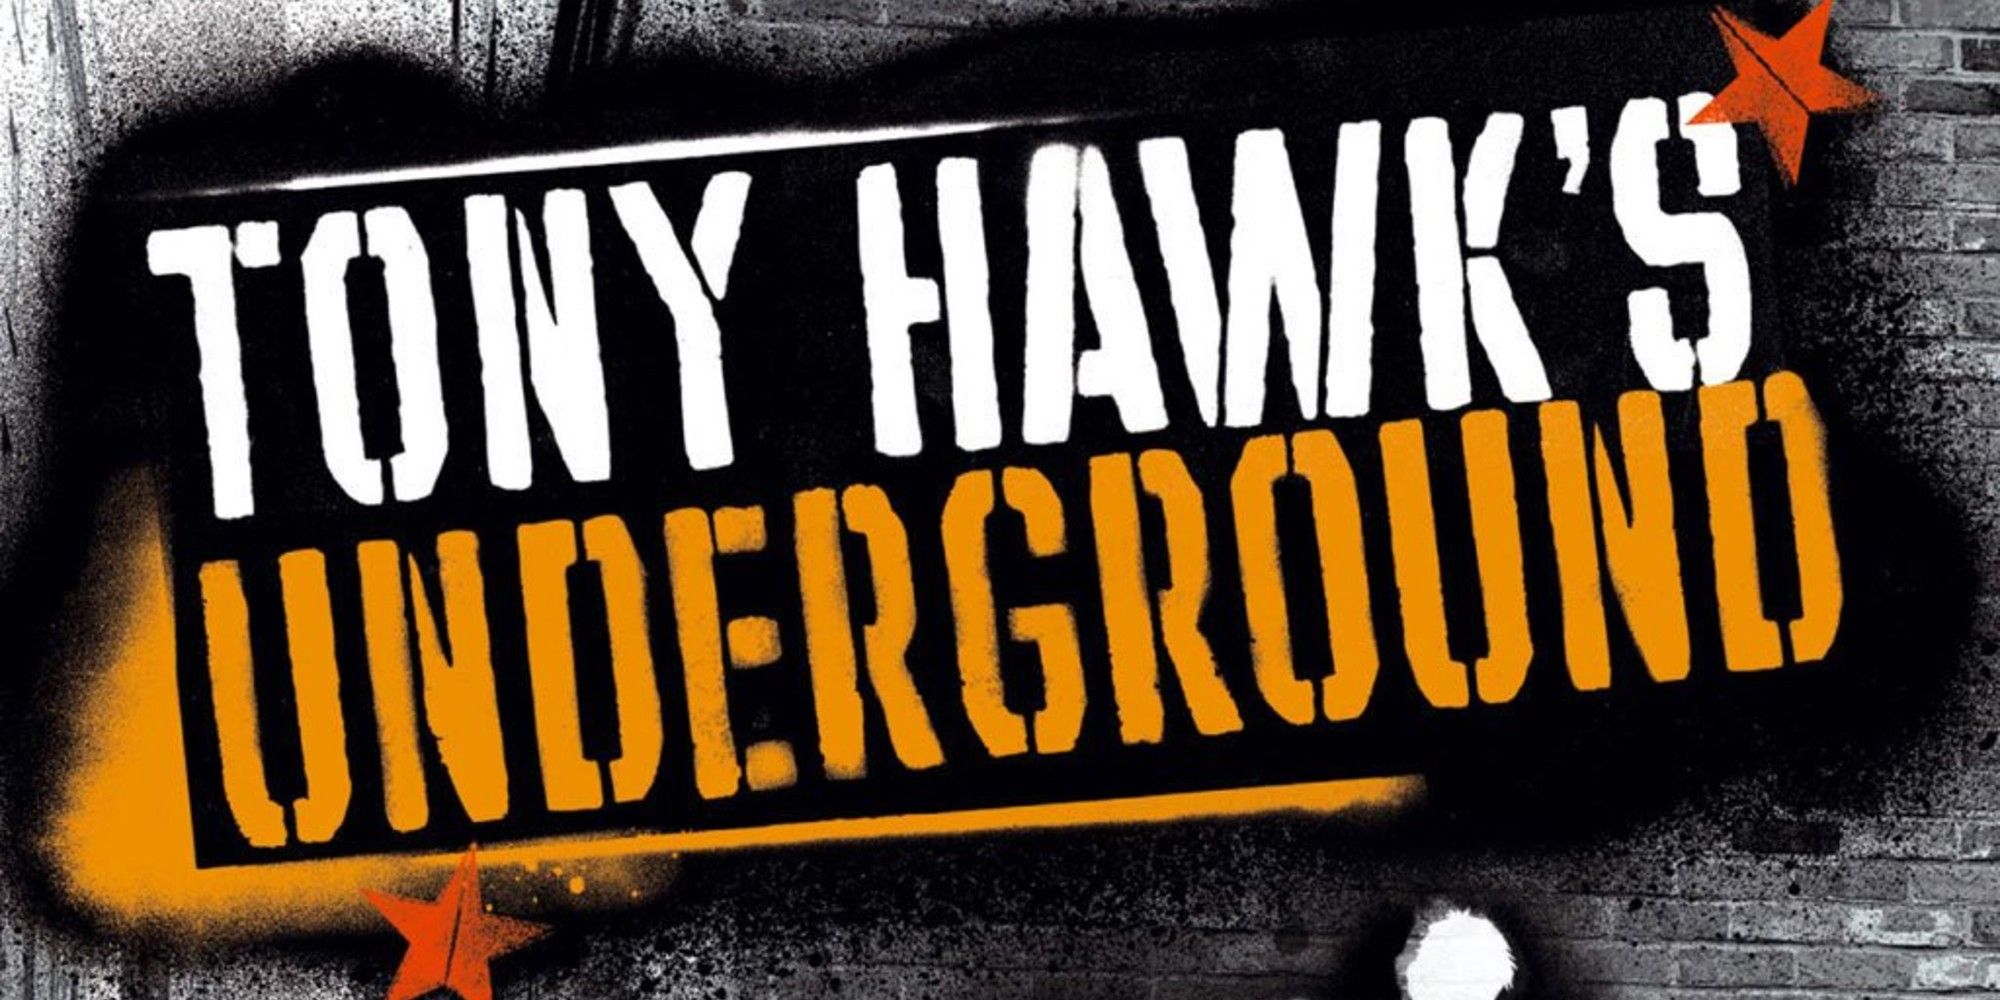 The logo for Tony Hawk's Underground